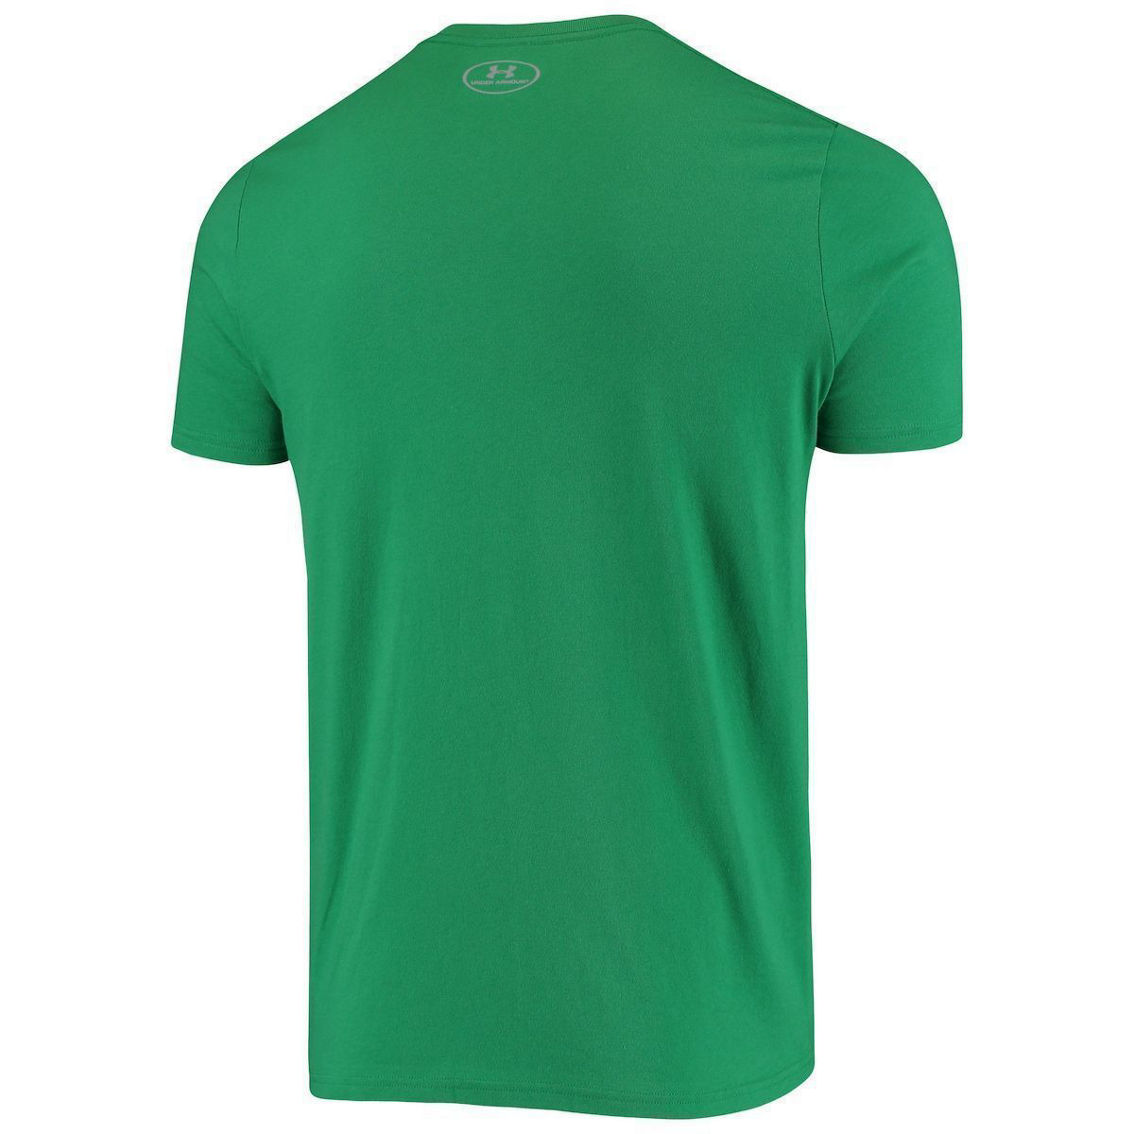 Under Armour Men's Kelly Green Notre Dame Fighting Irish Wordmark Logo Performance Cotton T-Shirt - Image 4 of 4